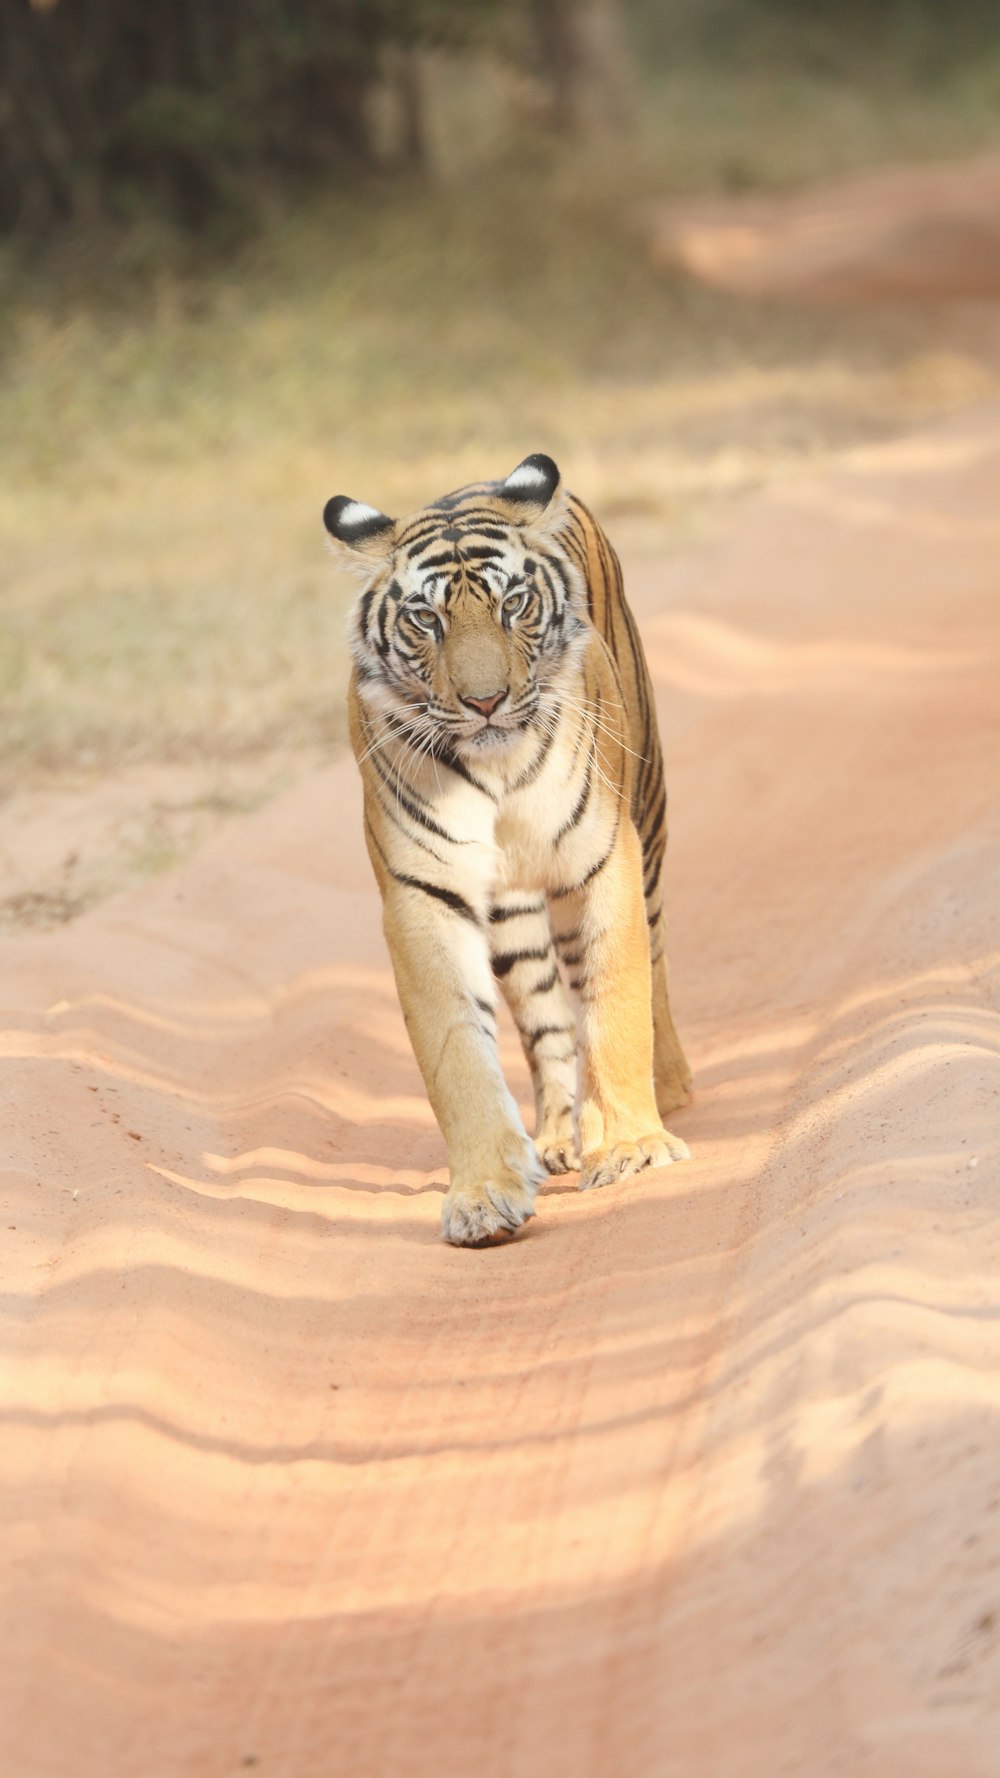 a tiger walking on a rock